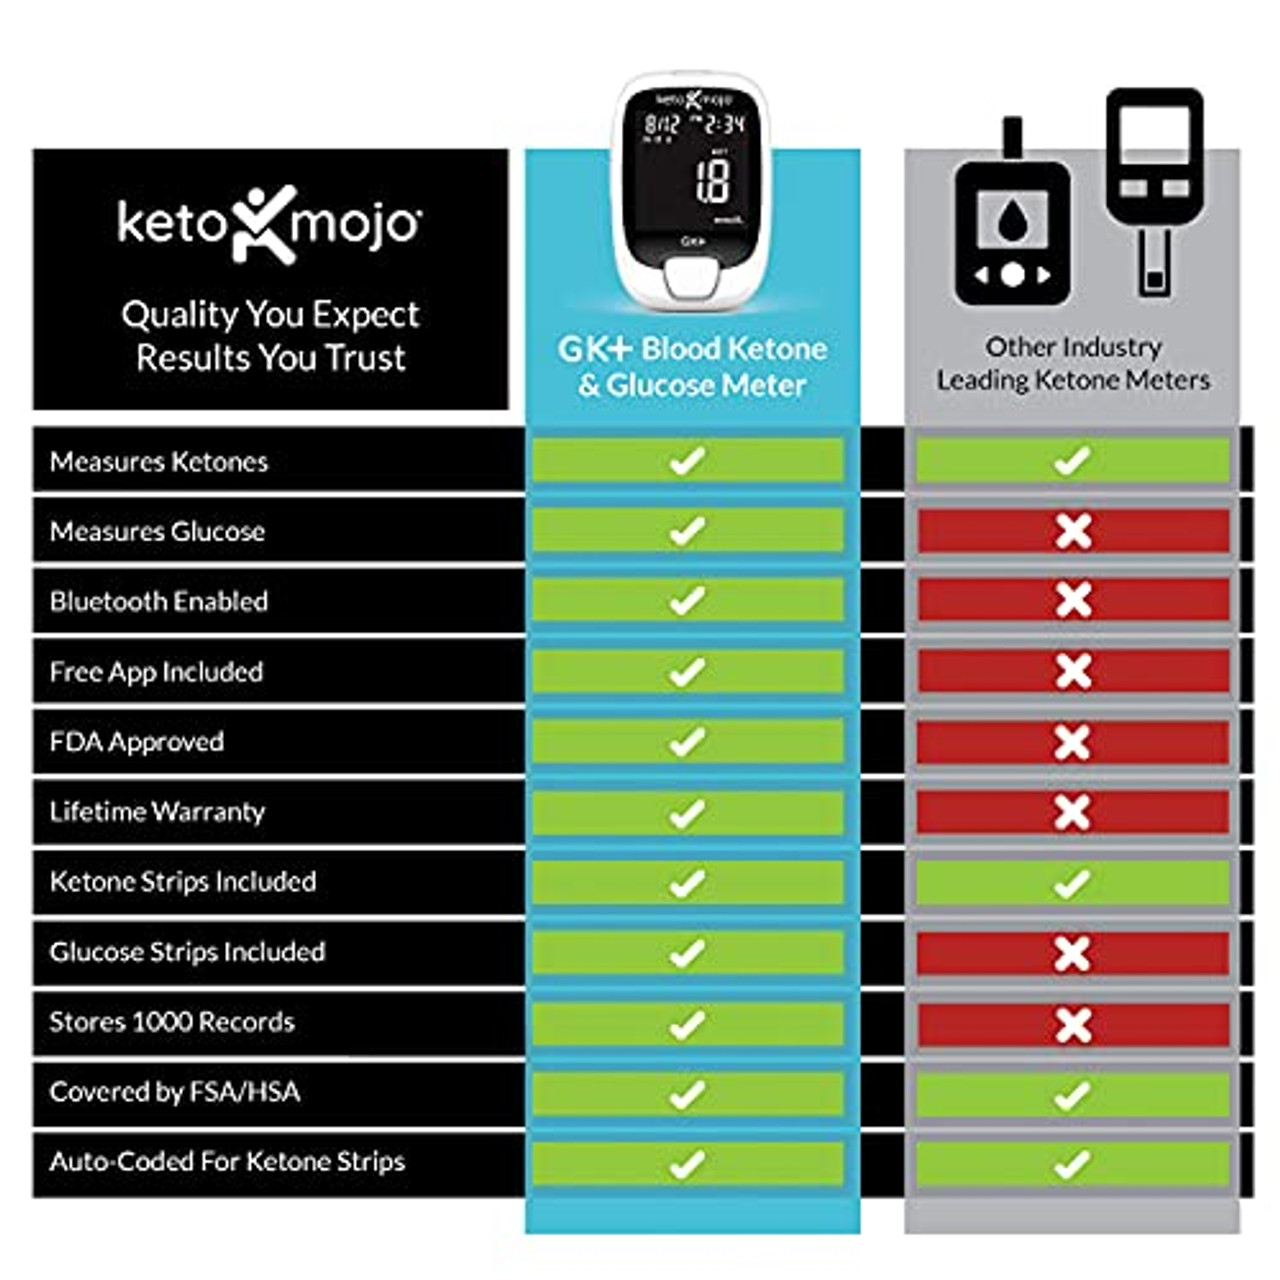 Blood Ketone Meter And 15 Blood Ketone Test Strips & 15 Lancets. Ketone  Monitor Kit For Ketogenic Diet. Keto Test Check Ketosis. 5 Second Fast Get  Results Blood Ketone Test Kit